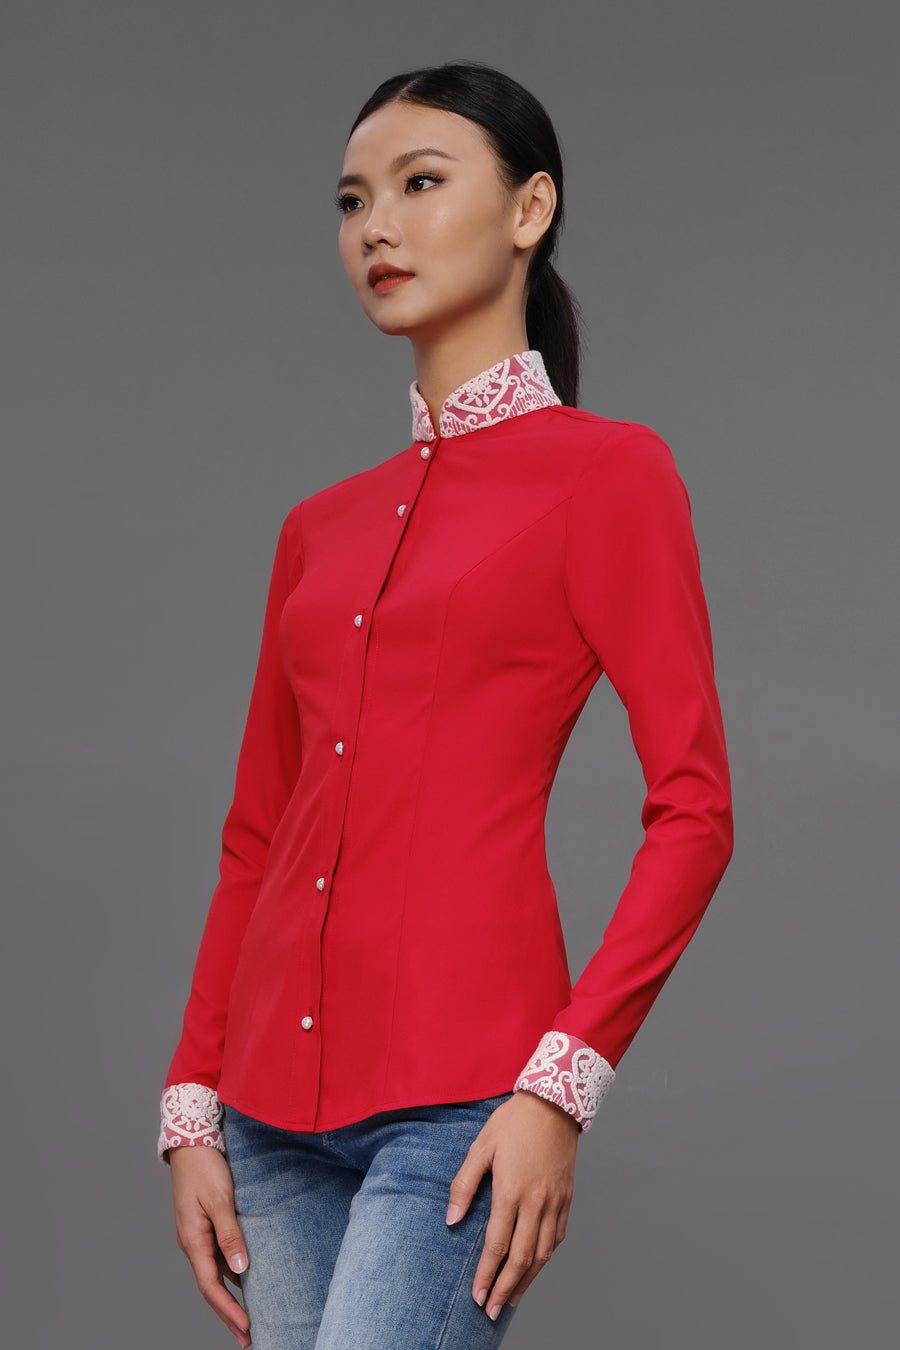 Joycelyn - Non Iron - Red long sleeve shirt